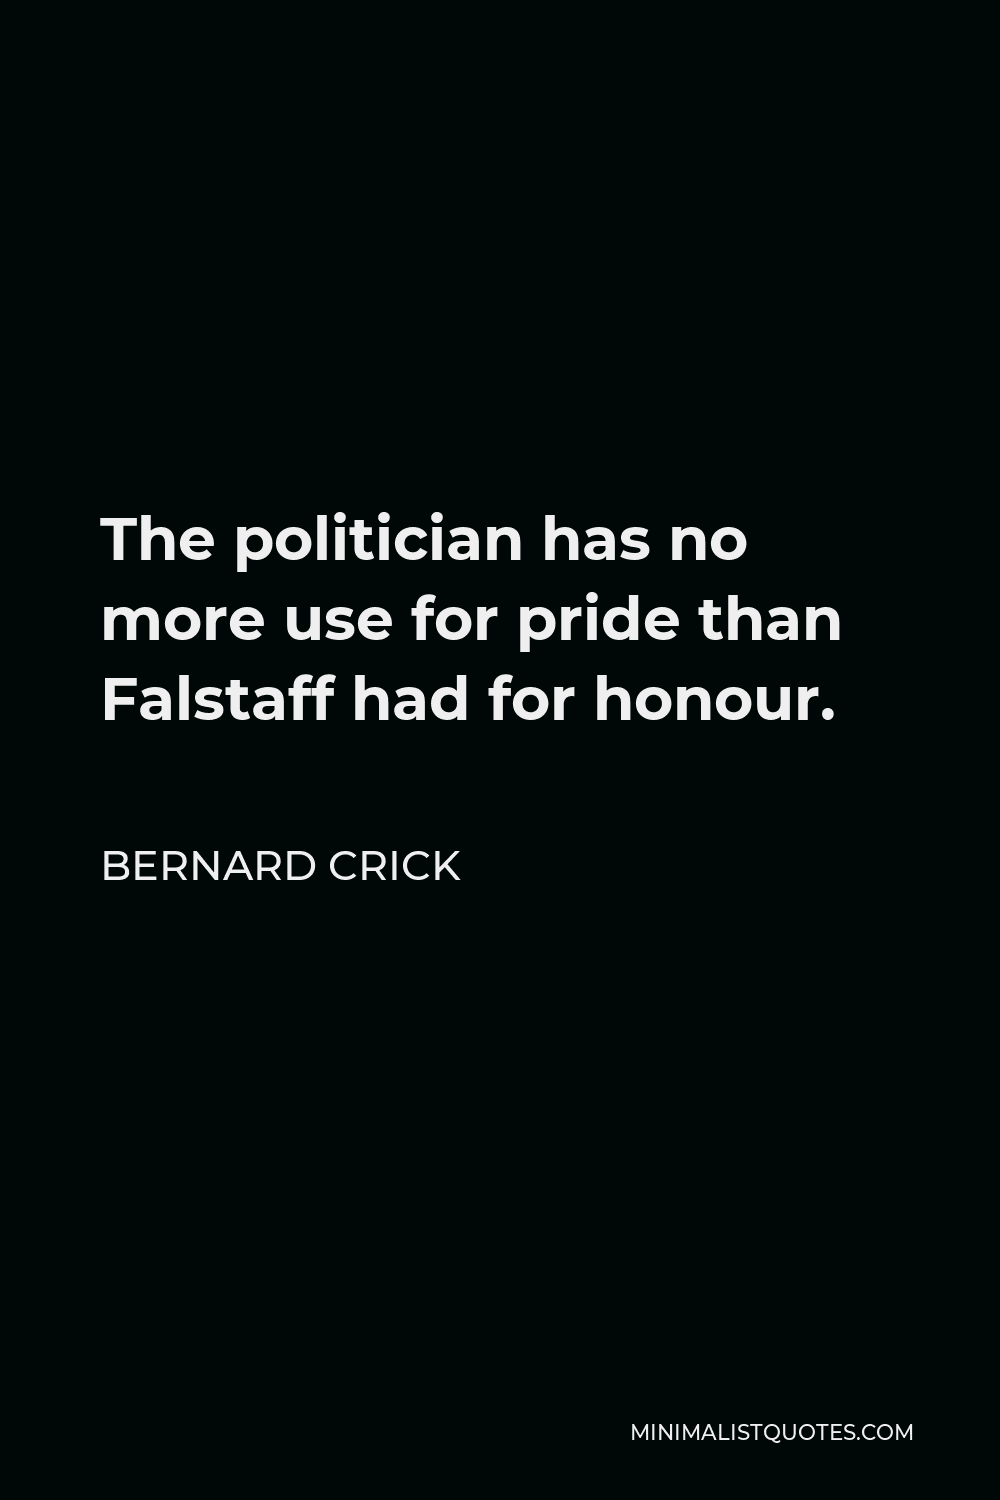 Bernard Crick Quote - The politician has no more use for pride than Falstaff had for honour.